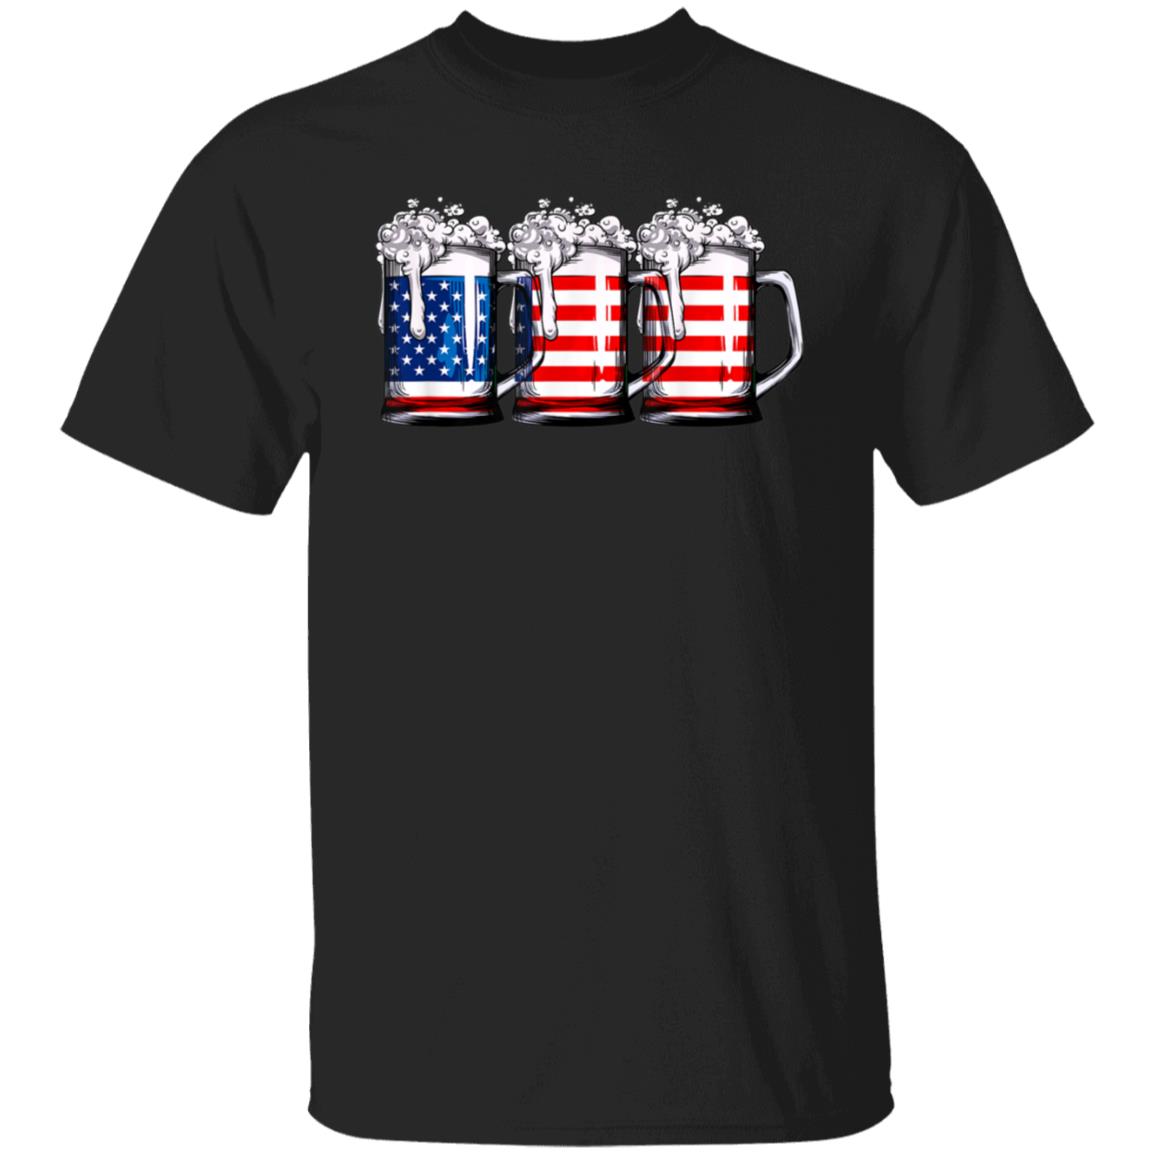 Beer American Flag T shirt 4th of July Men Women Merica USA Black Top